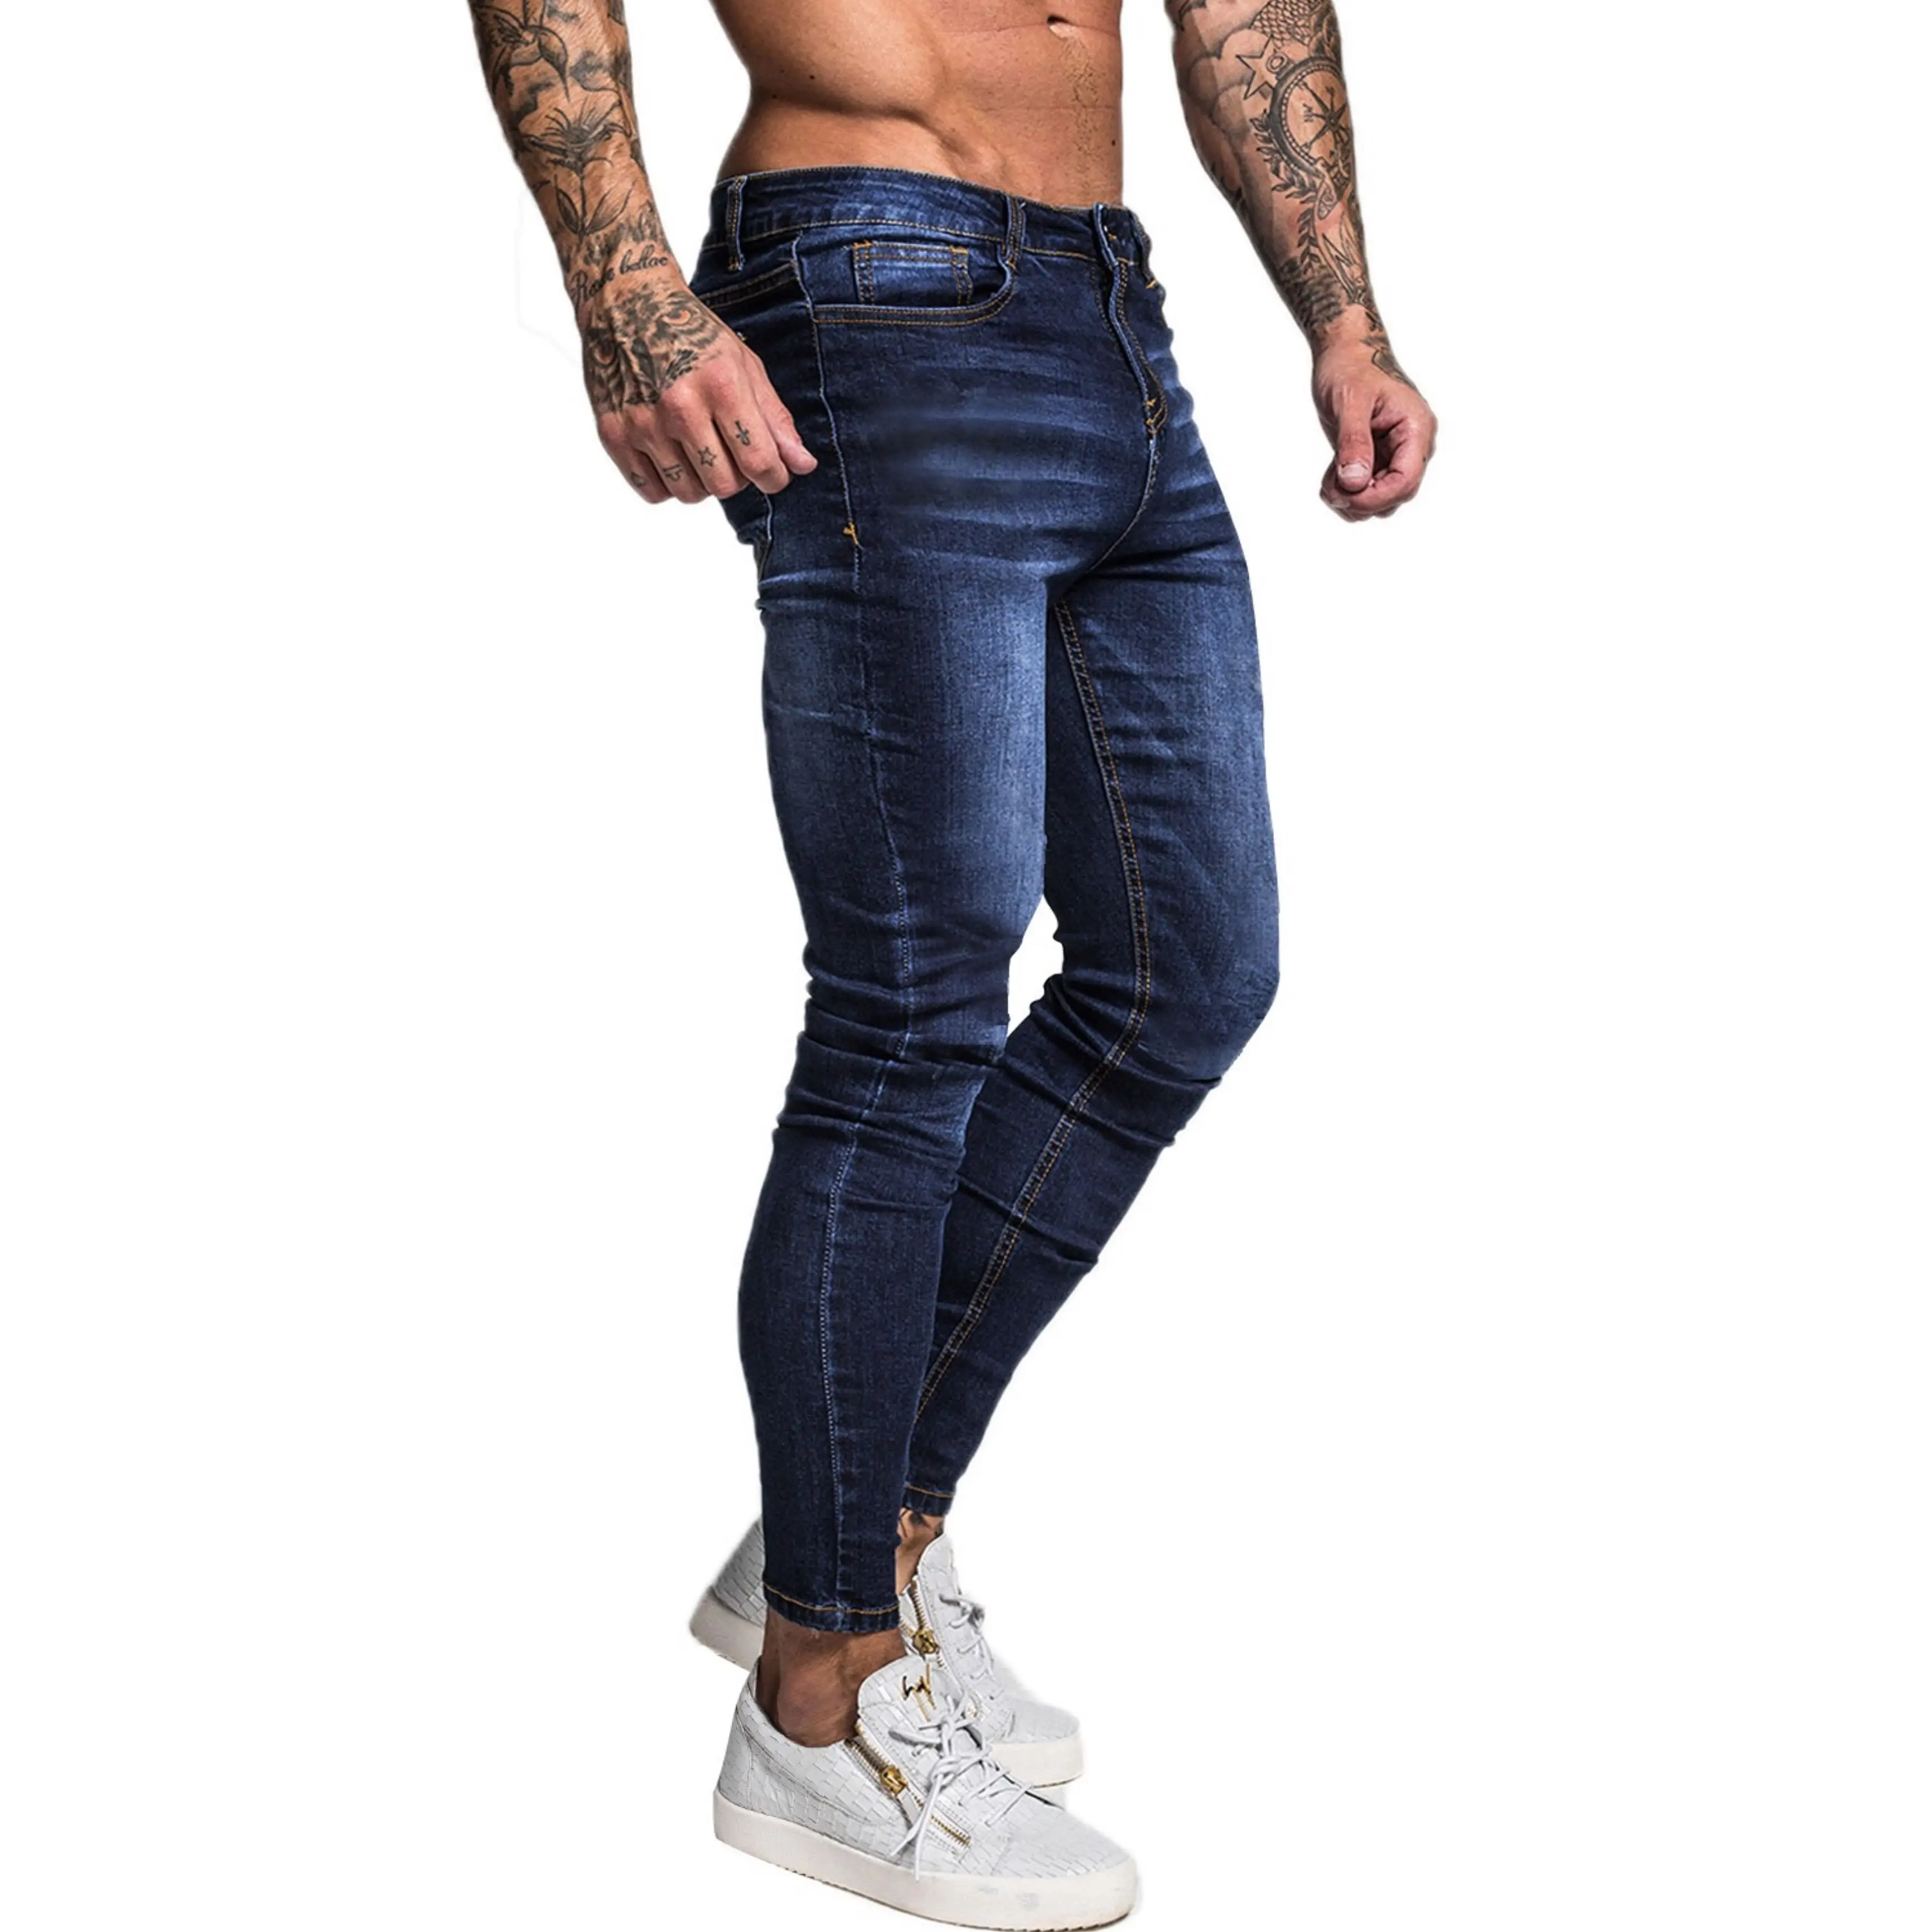 Amica Hommes Jeans Pantalon Used Streetwear Look Skinny Pant épaisseur coutures bleu 9580 